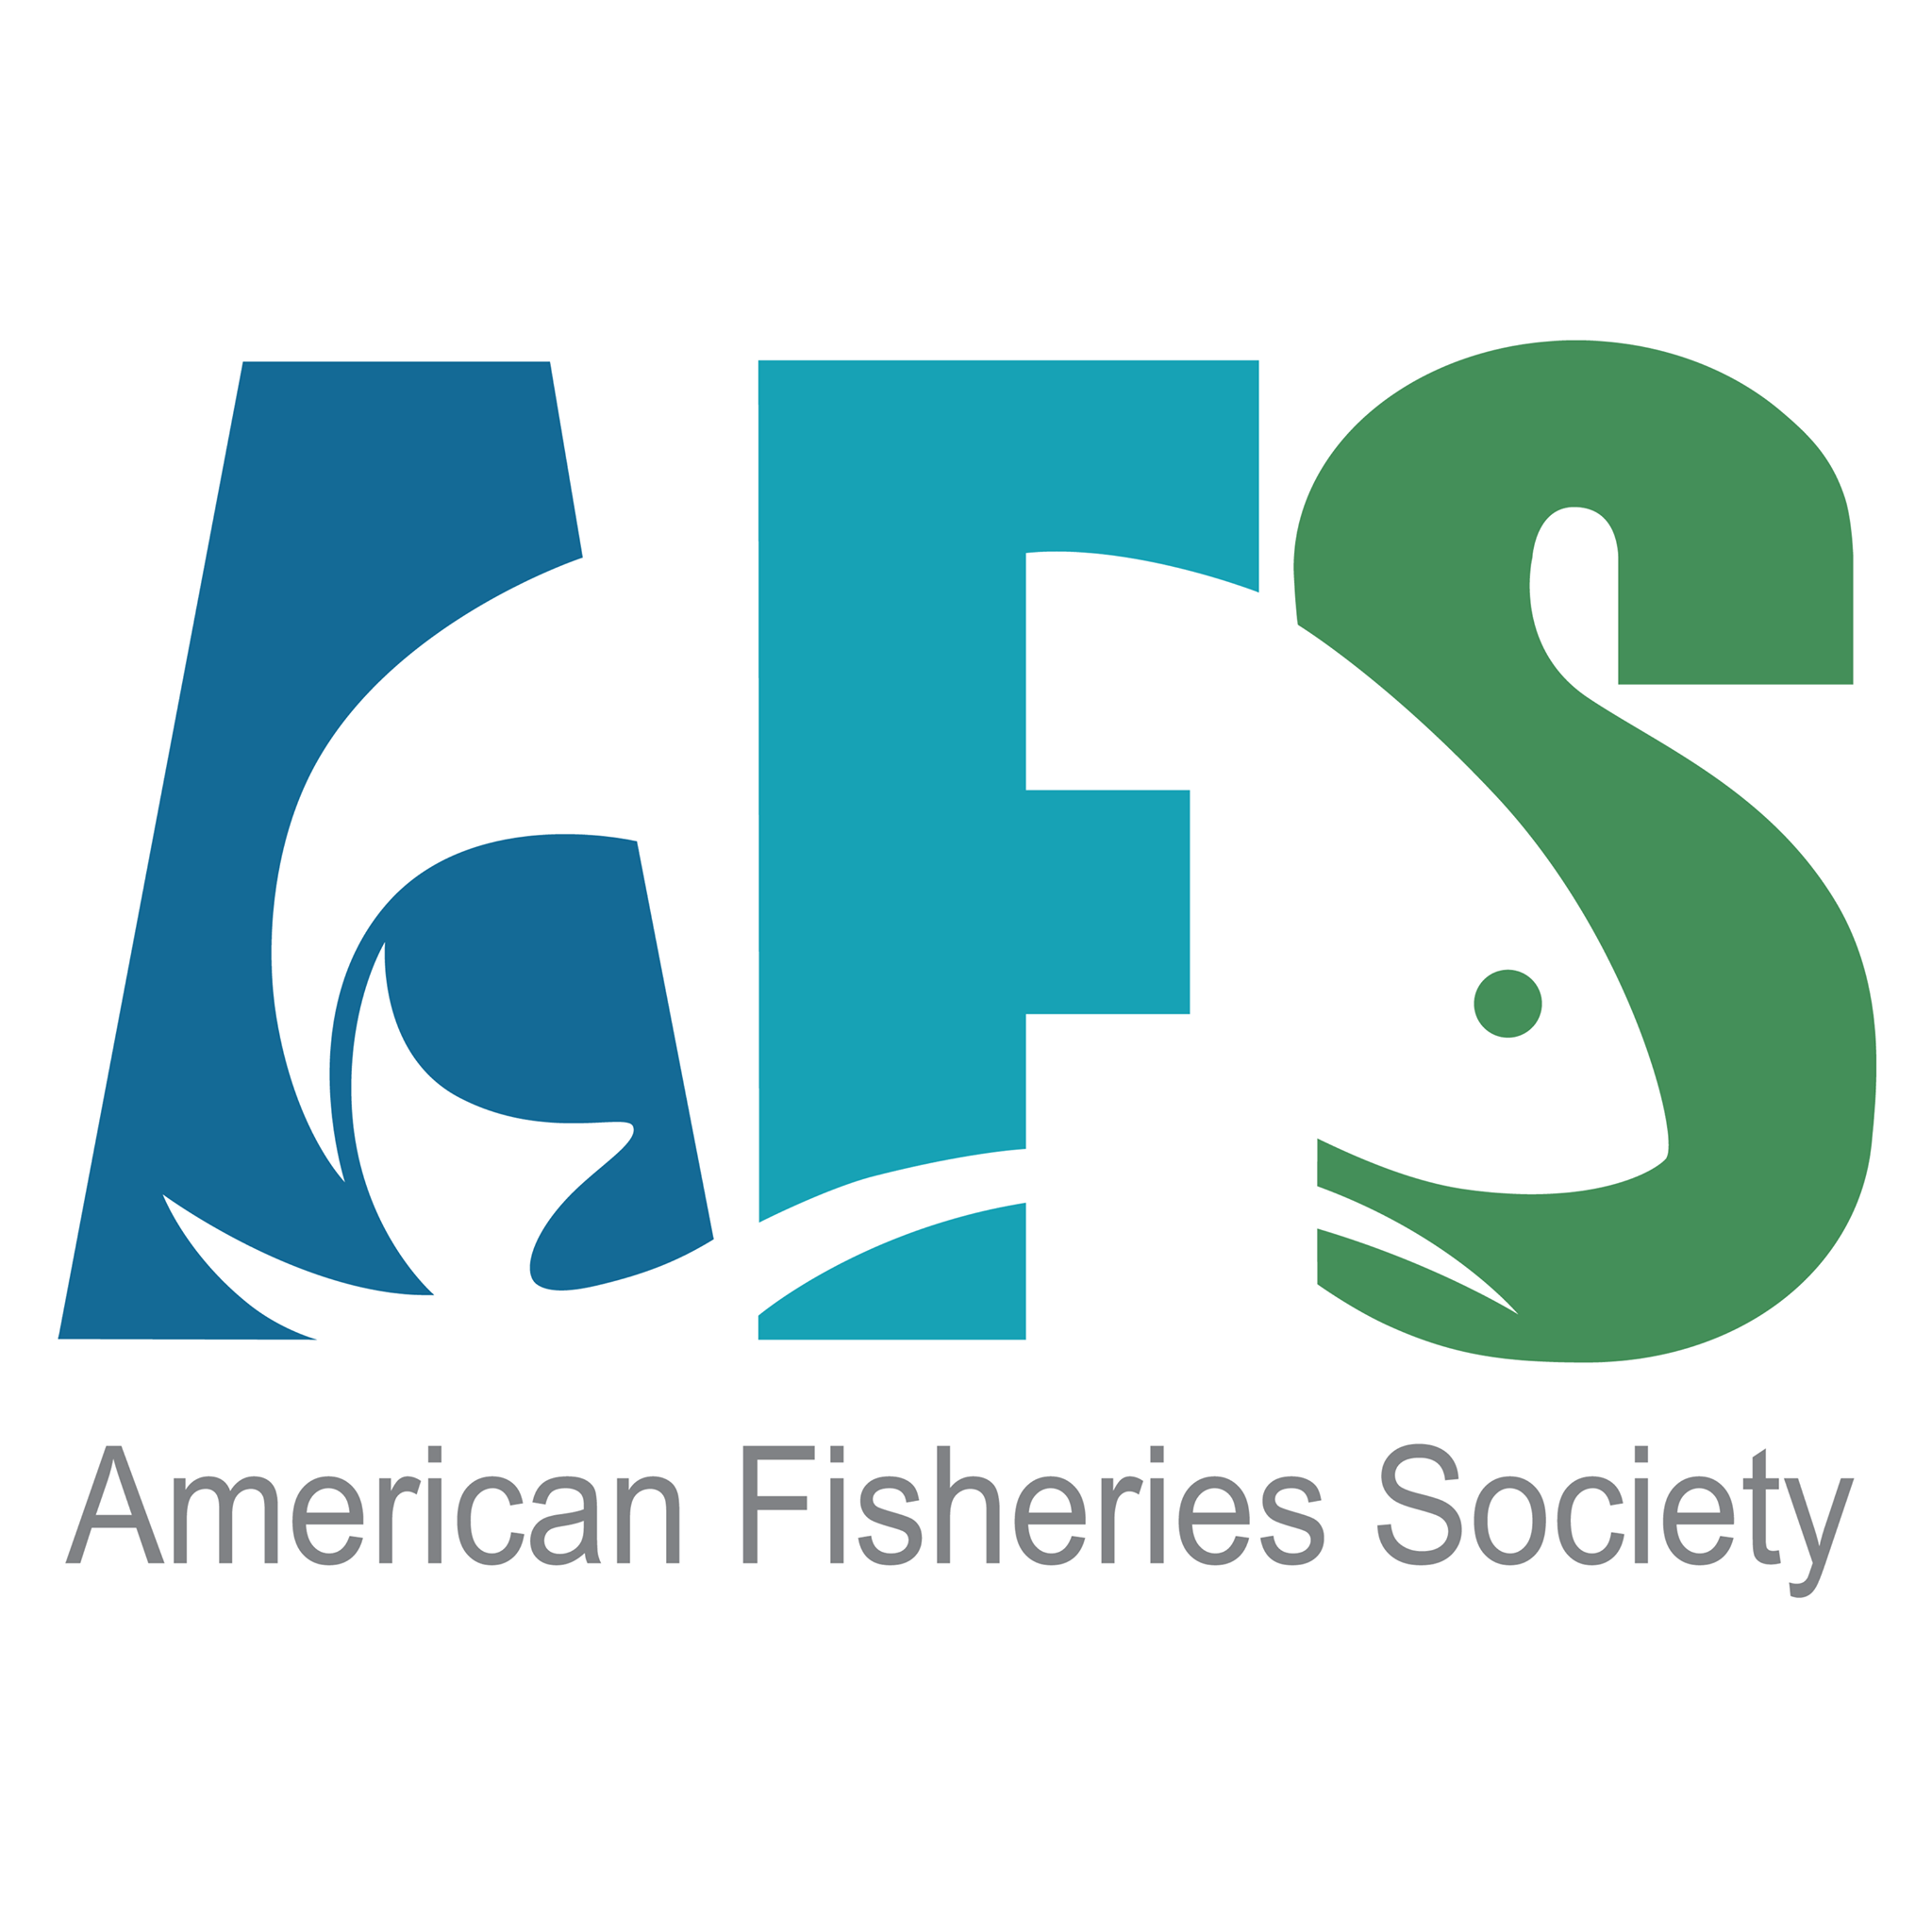 American Fisheries Society - Professional Associations - JobStars USA